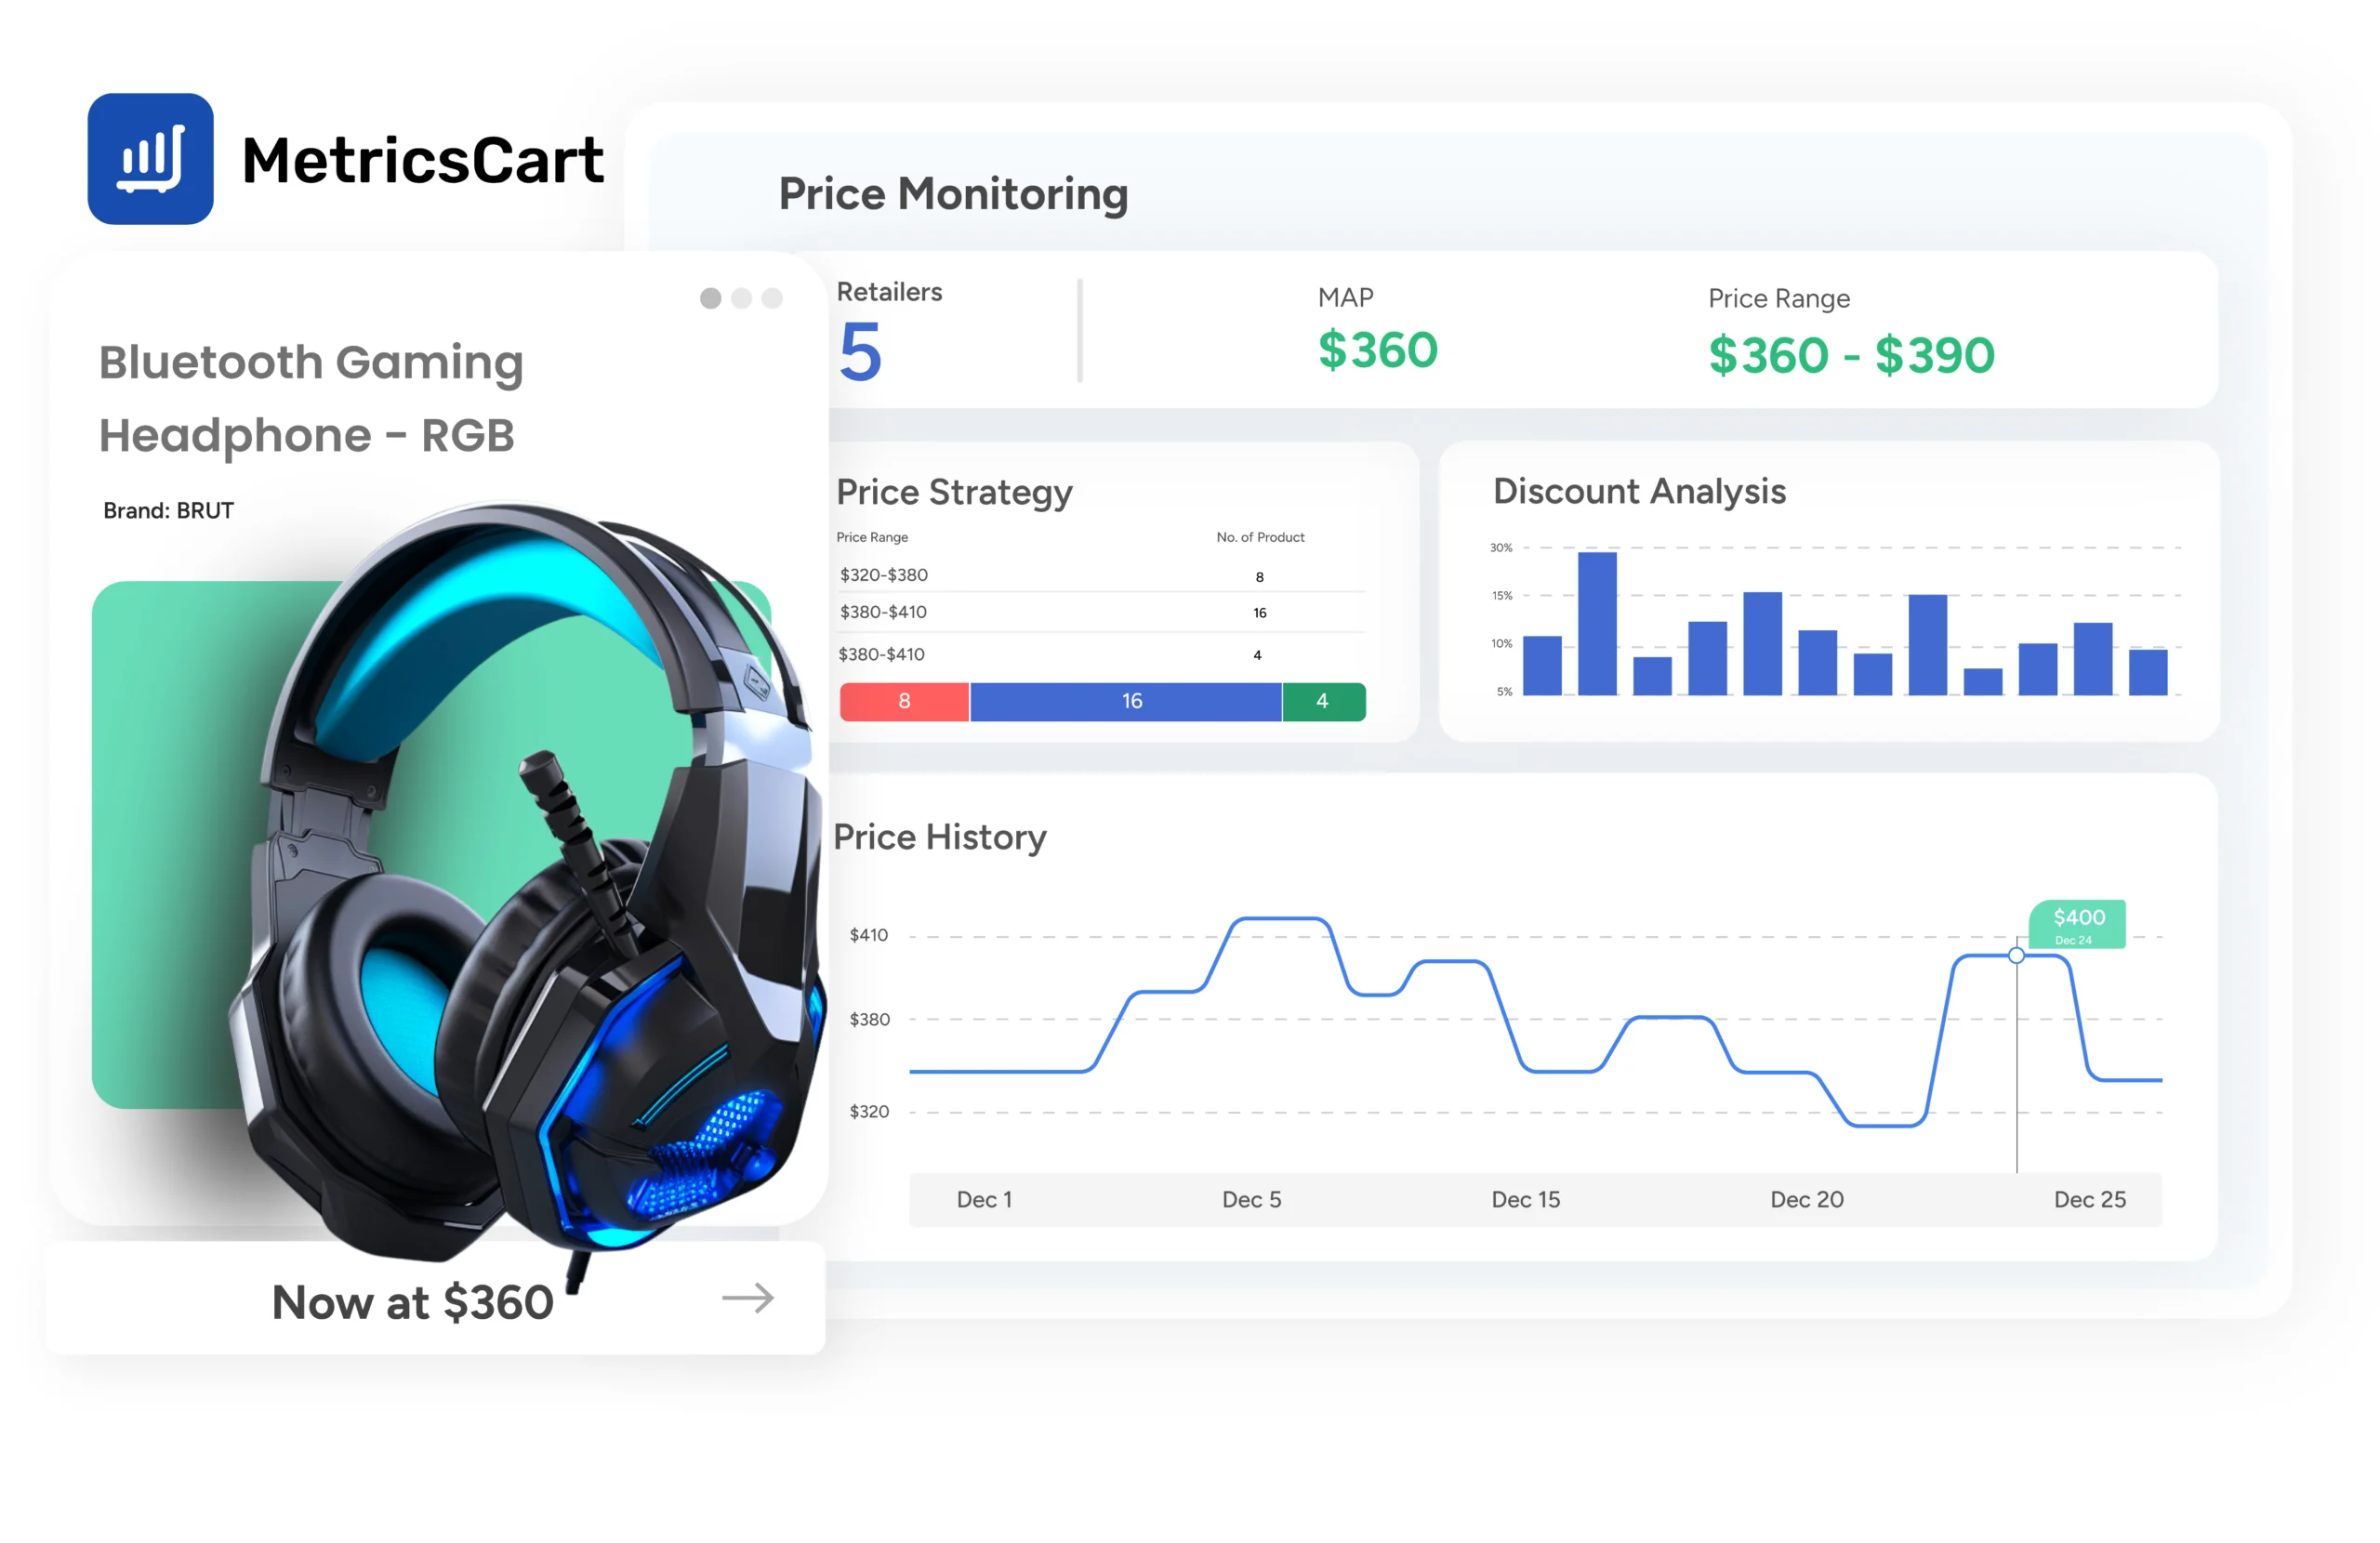 A screenshot of the price monitoring capabilities of MetricsCart